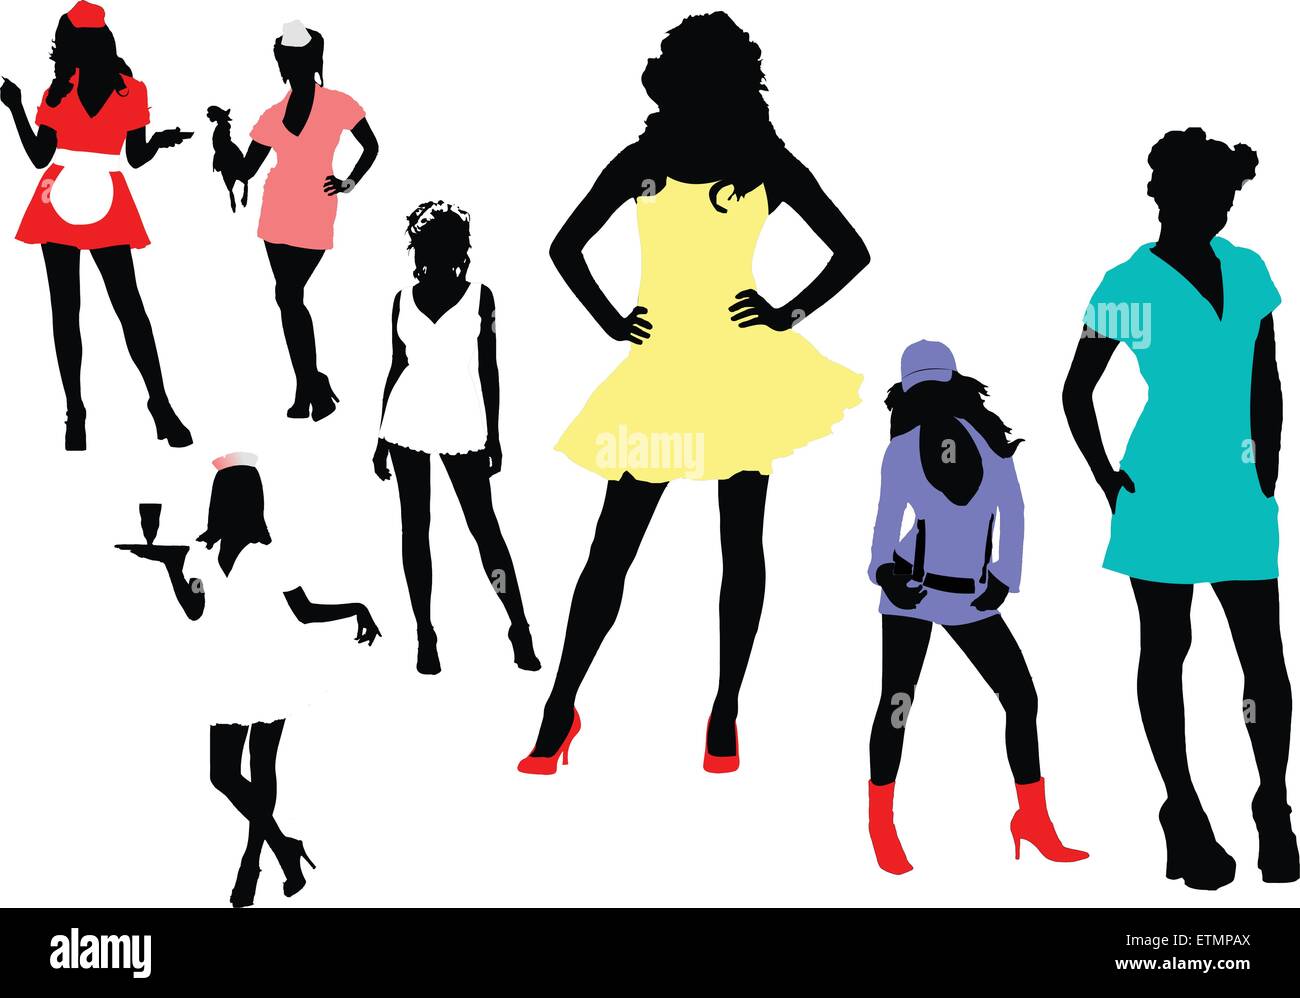 Seven woman silhouettes. Vector illustration Stock Vector Image & Art ...